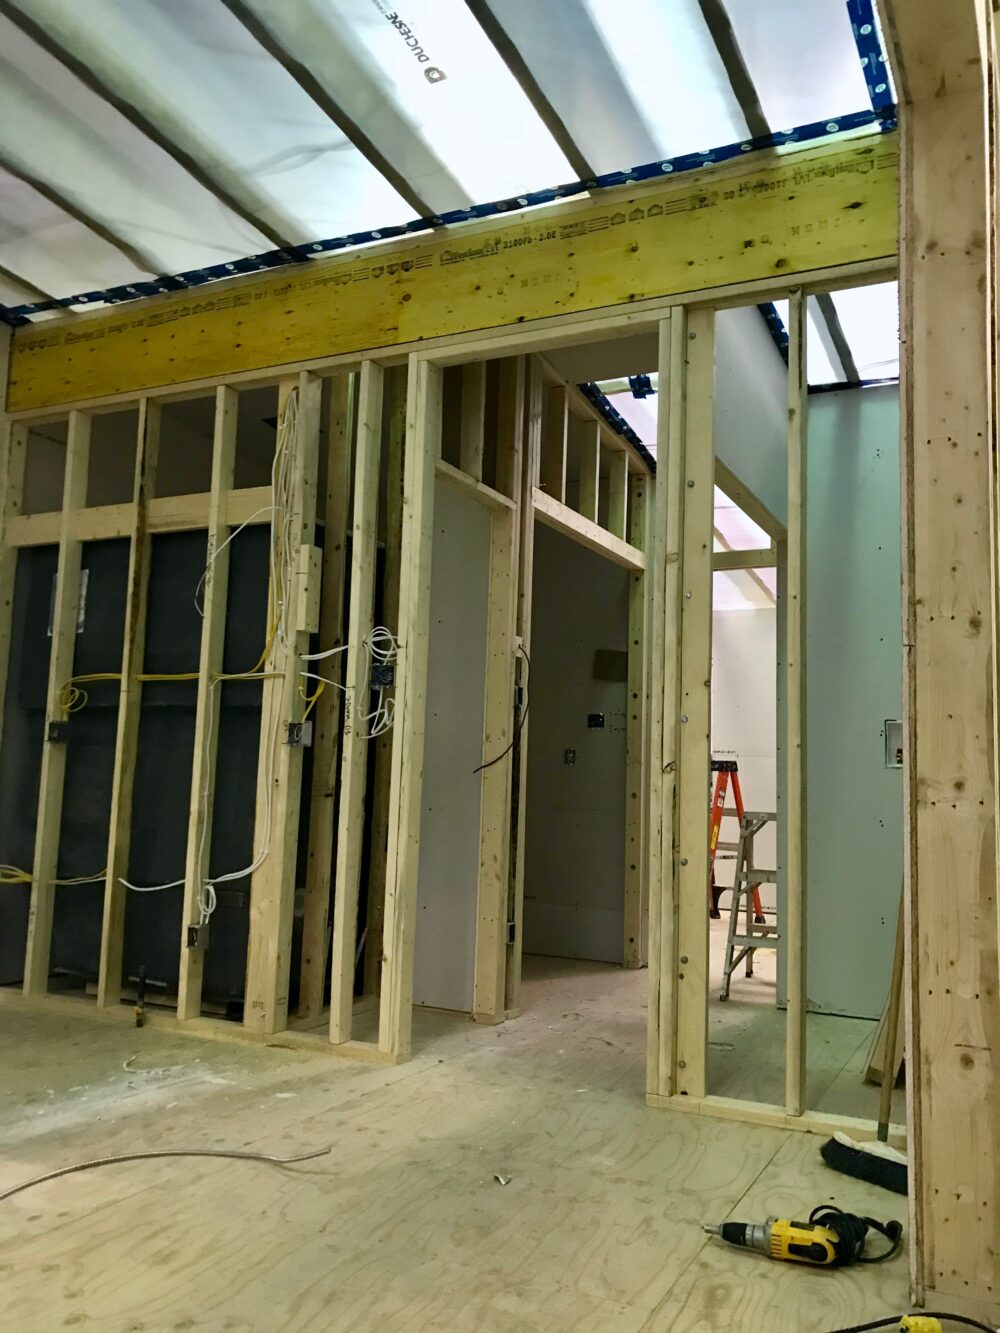 Inside Unit Mid-Construction